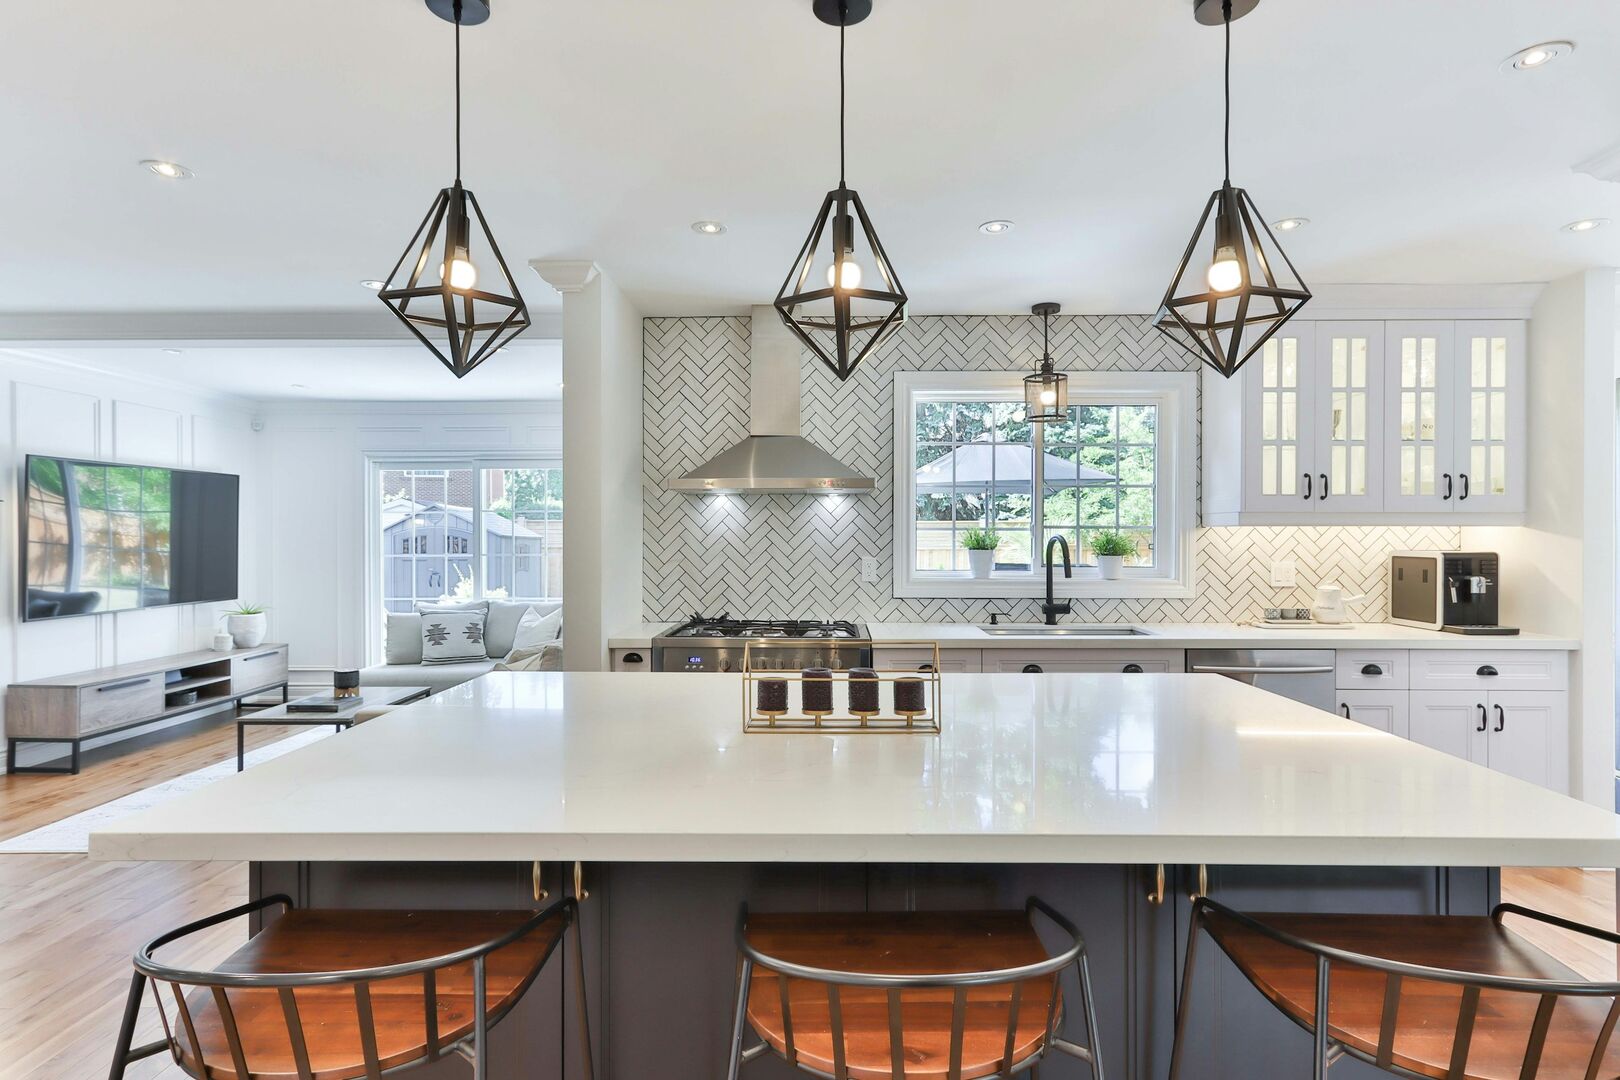 White modern kitchen with chevron tile backsplash and stainless steel appliances